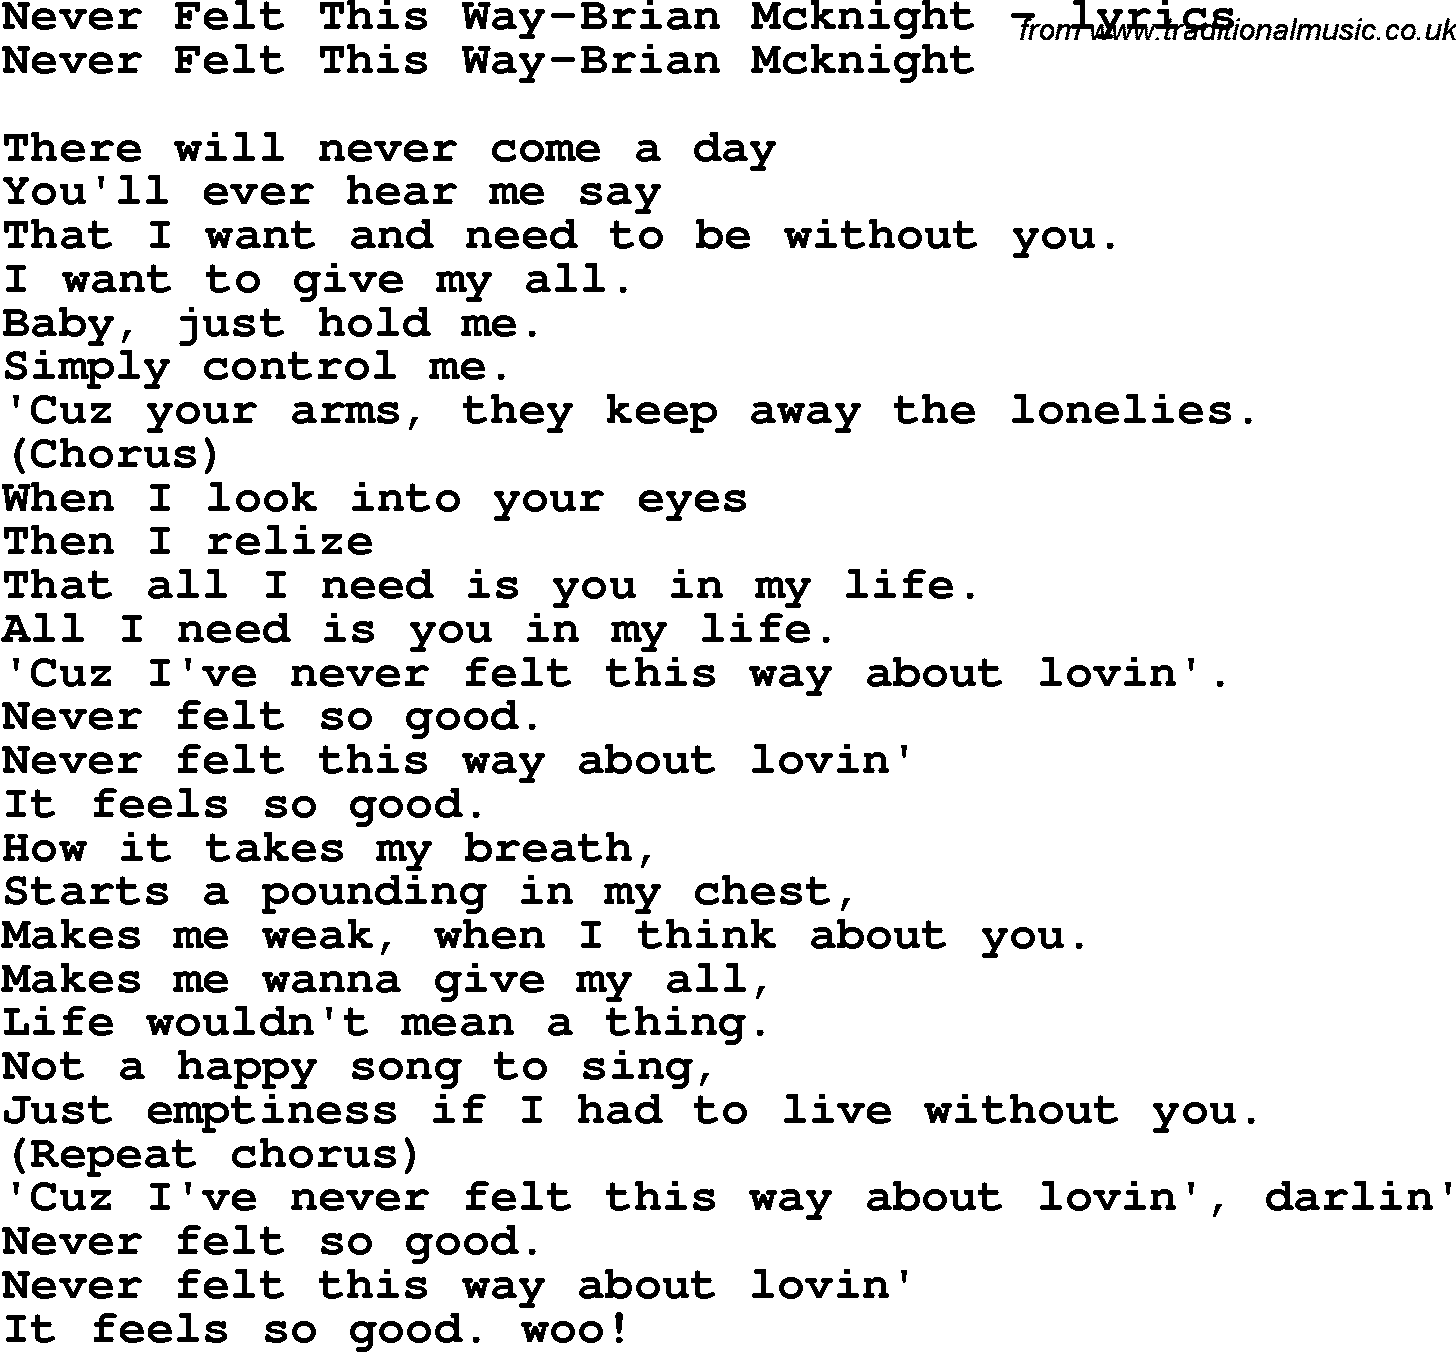 Love Song Lyrics for: Never Felt This Way-Brian Mcknight